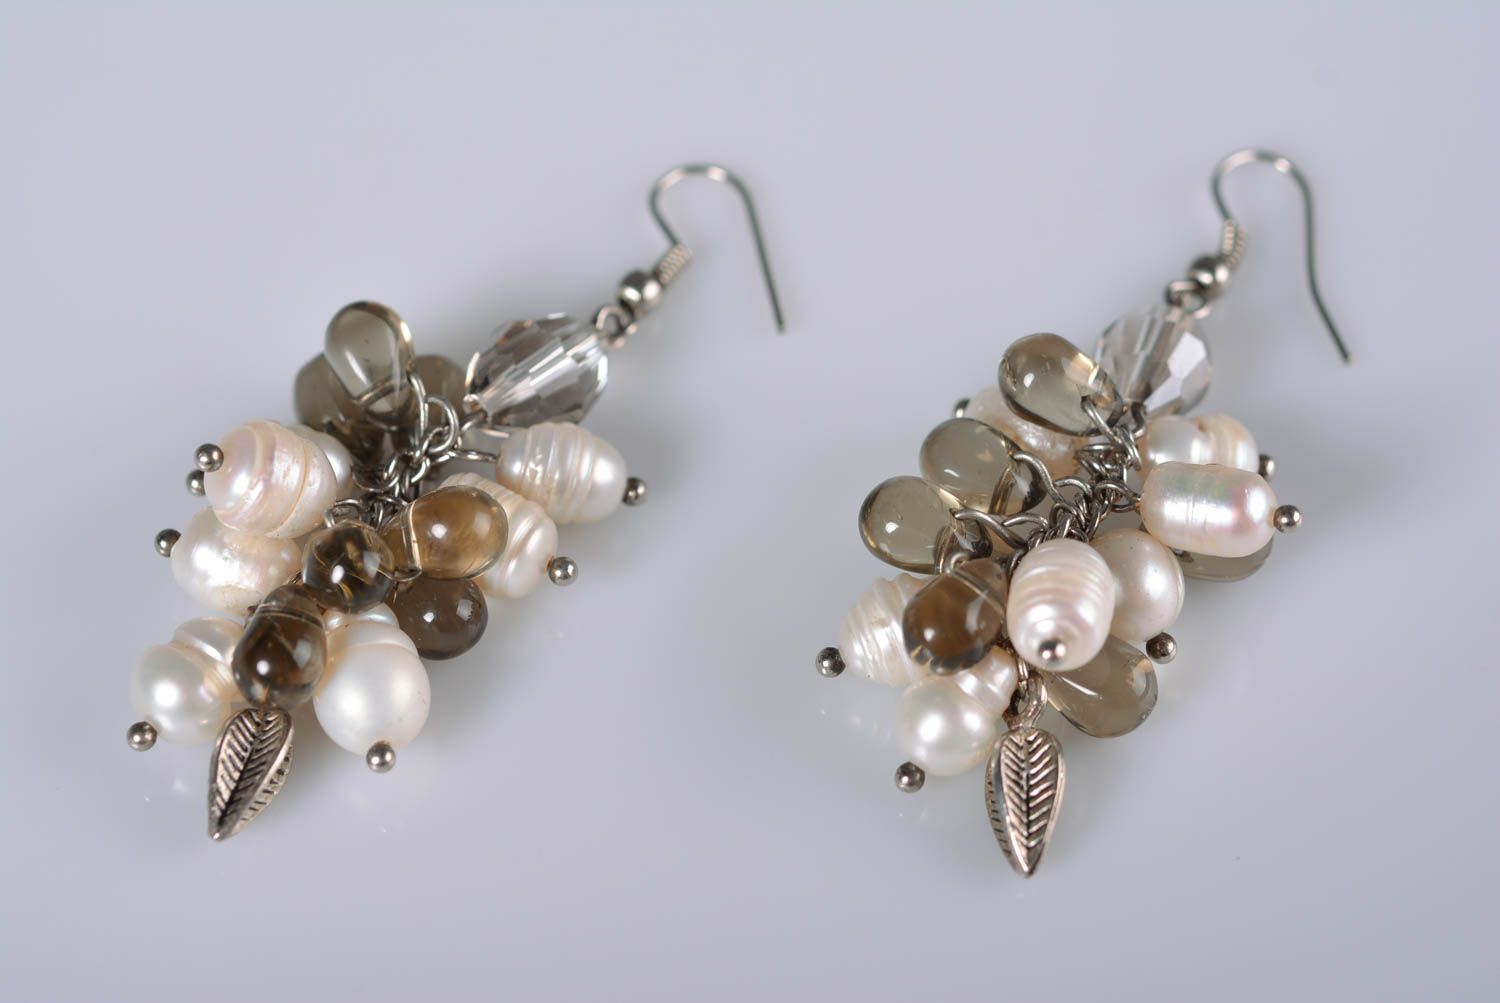 Unusual handmade beaded earrings cool jewelry designs fashion trends photo 4